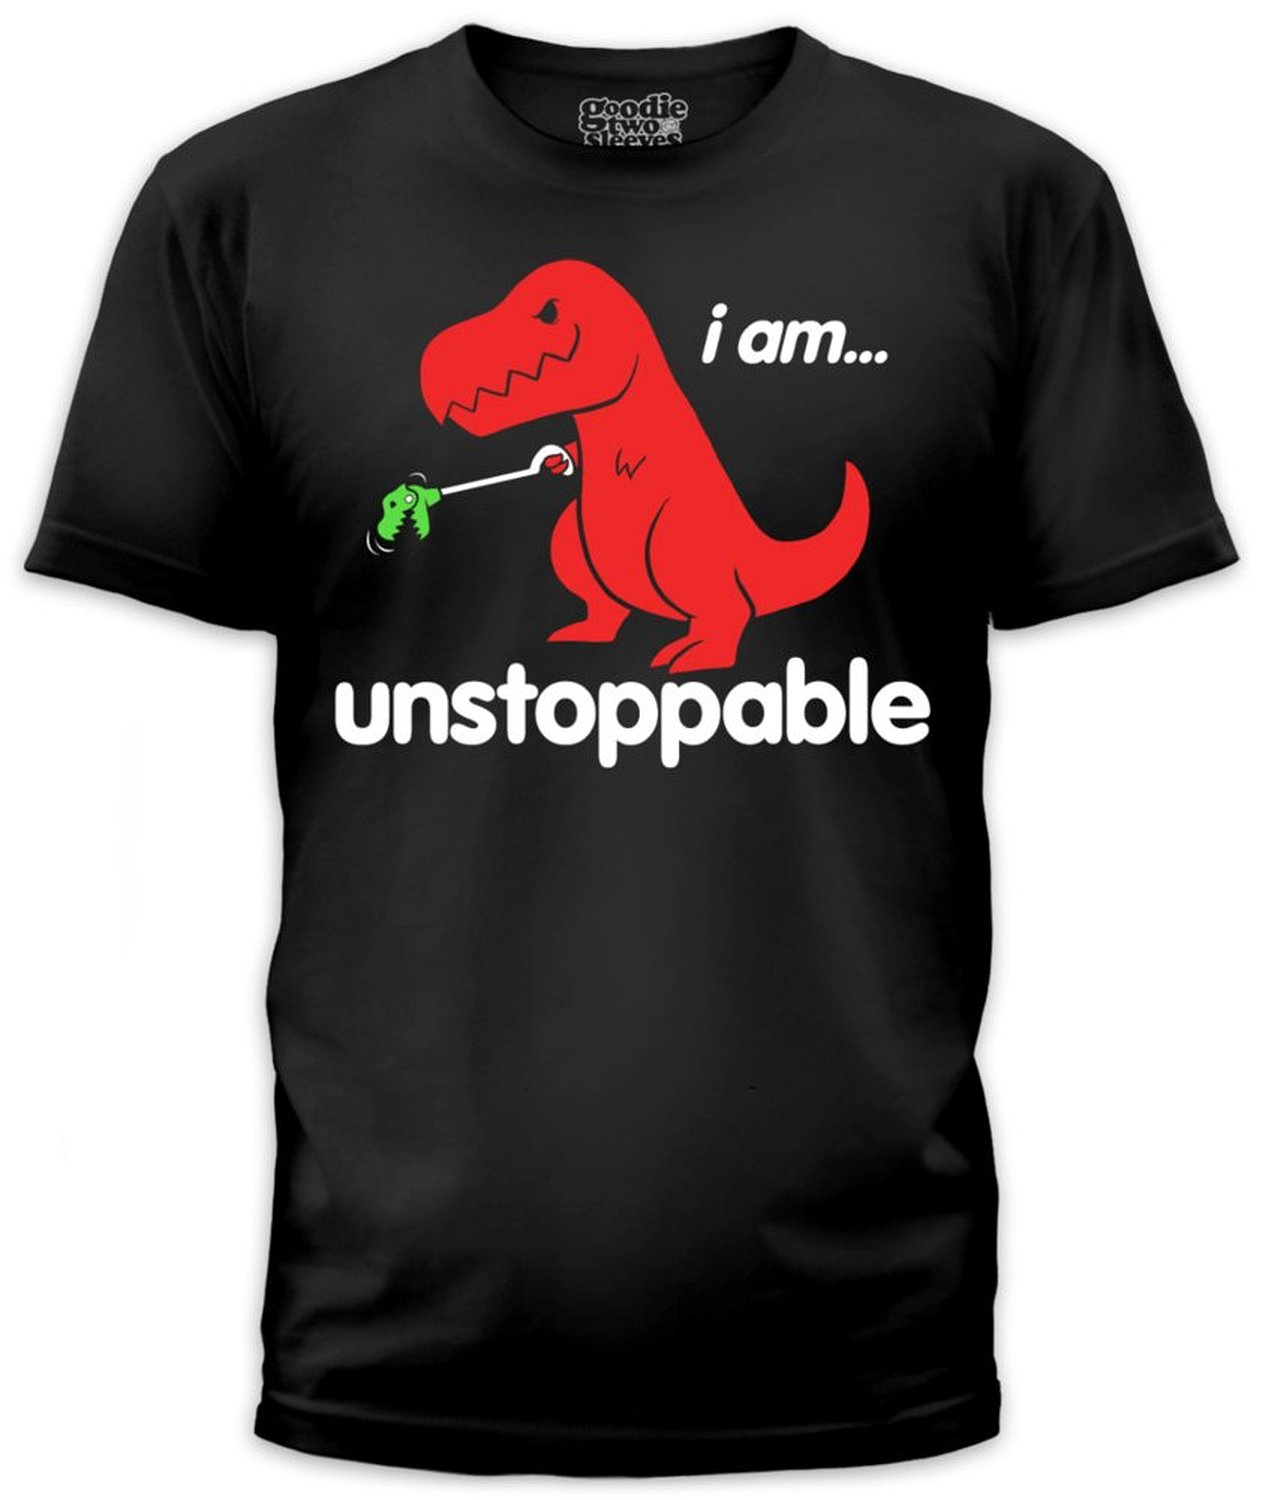 Unstoppable T-Rex Shirt